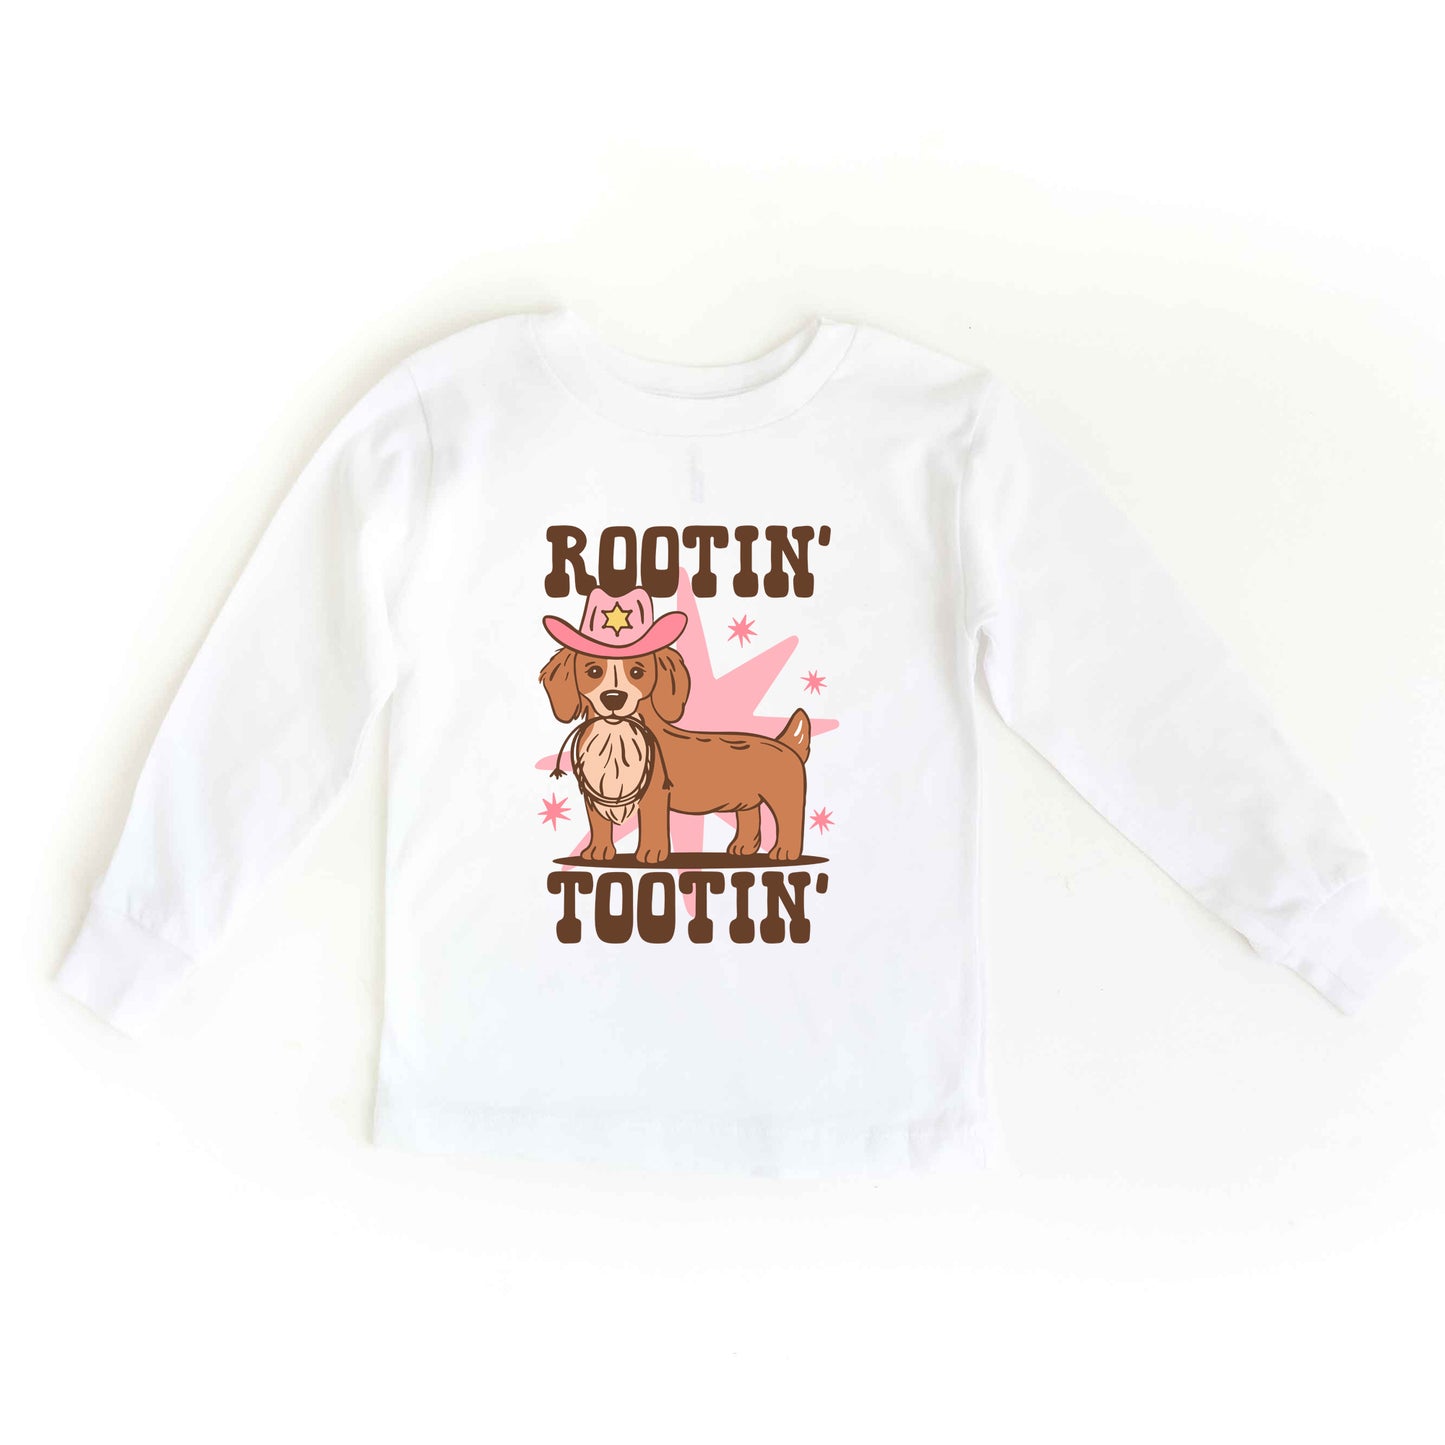 Rootin' Tootin' Dog | Youth Long Sleeve Tee